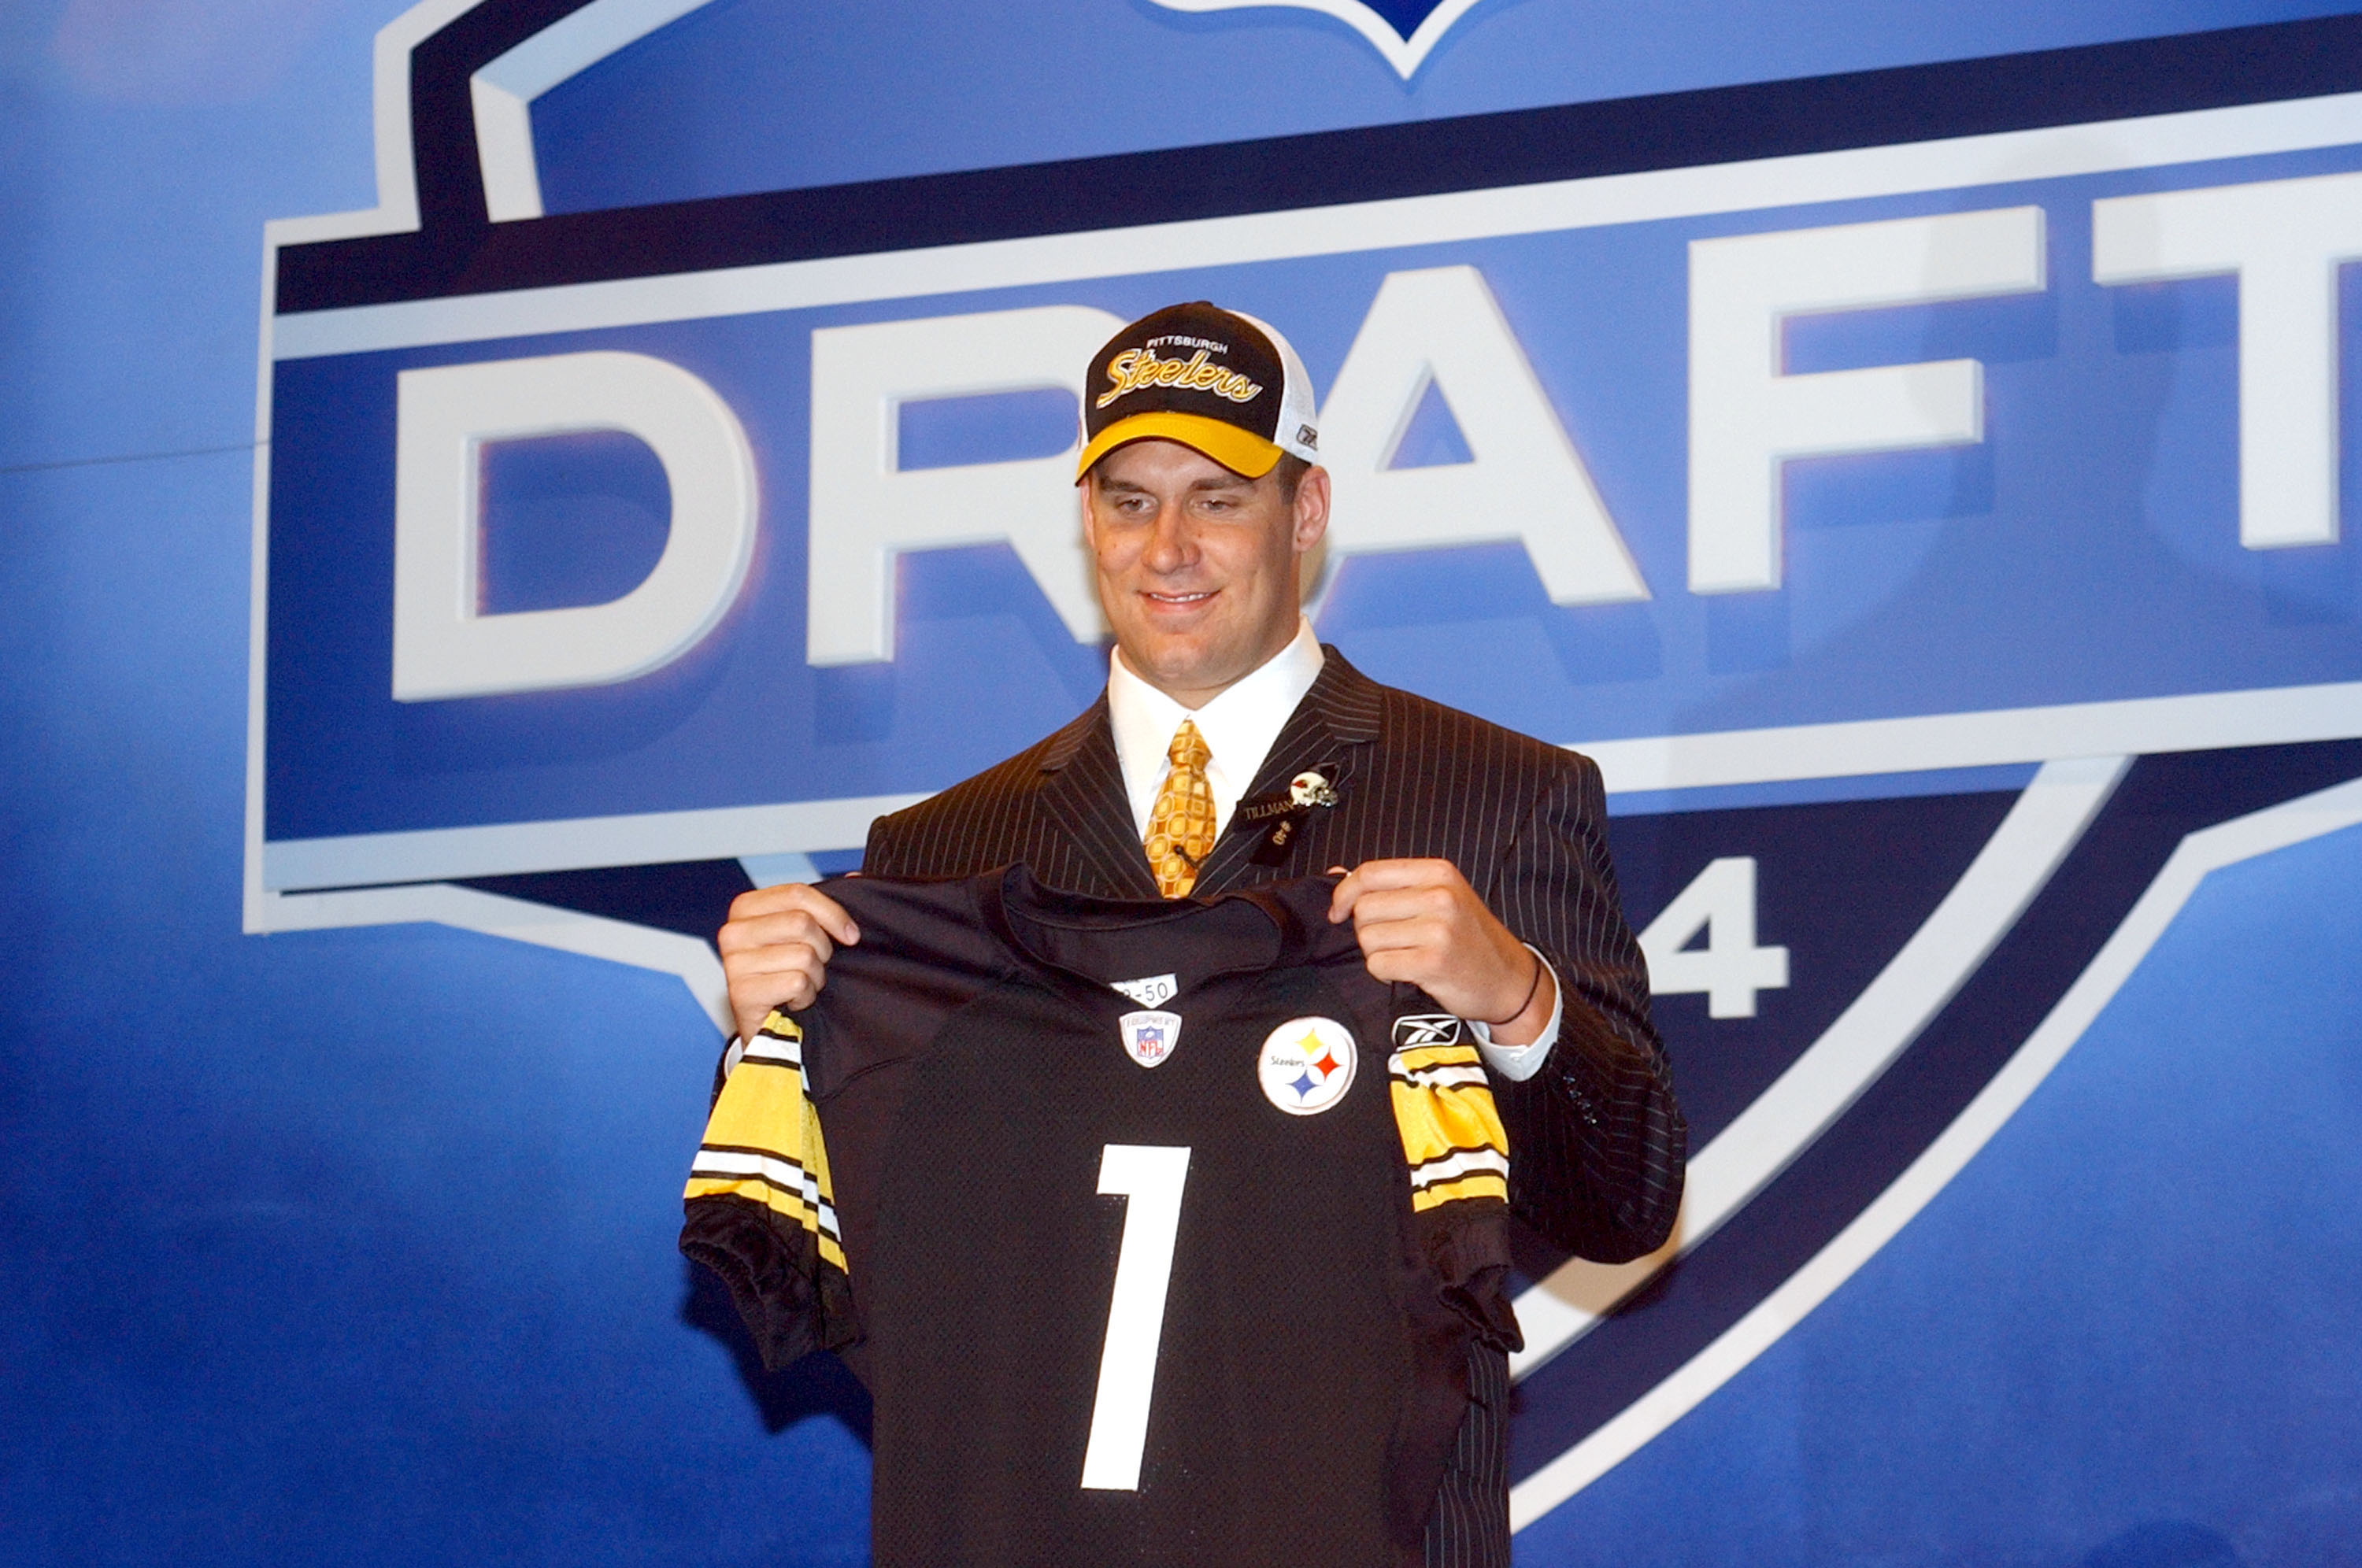 Pittsburgh Steelers' No. 1 draft pick of 2004 Ben Roethlisberger smiles